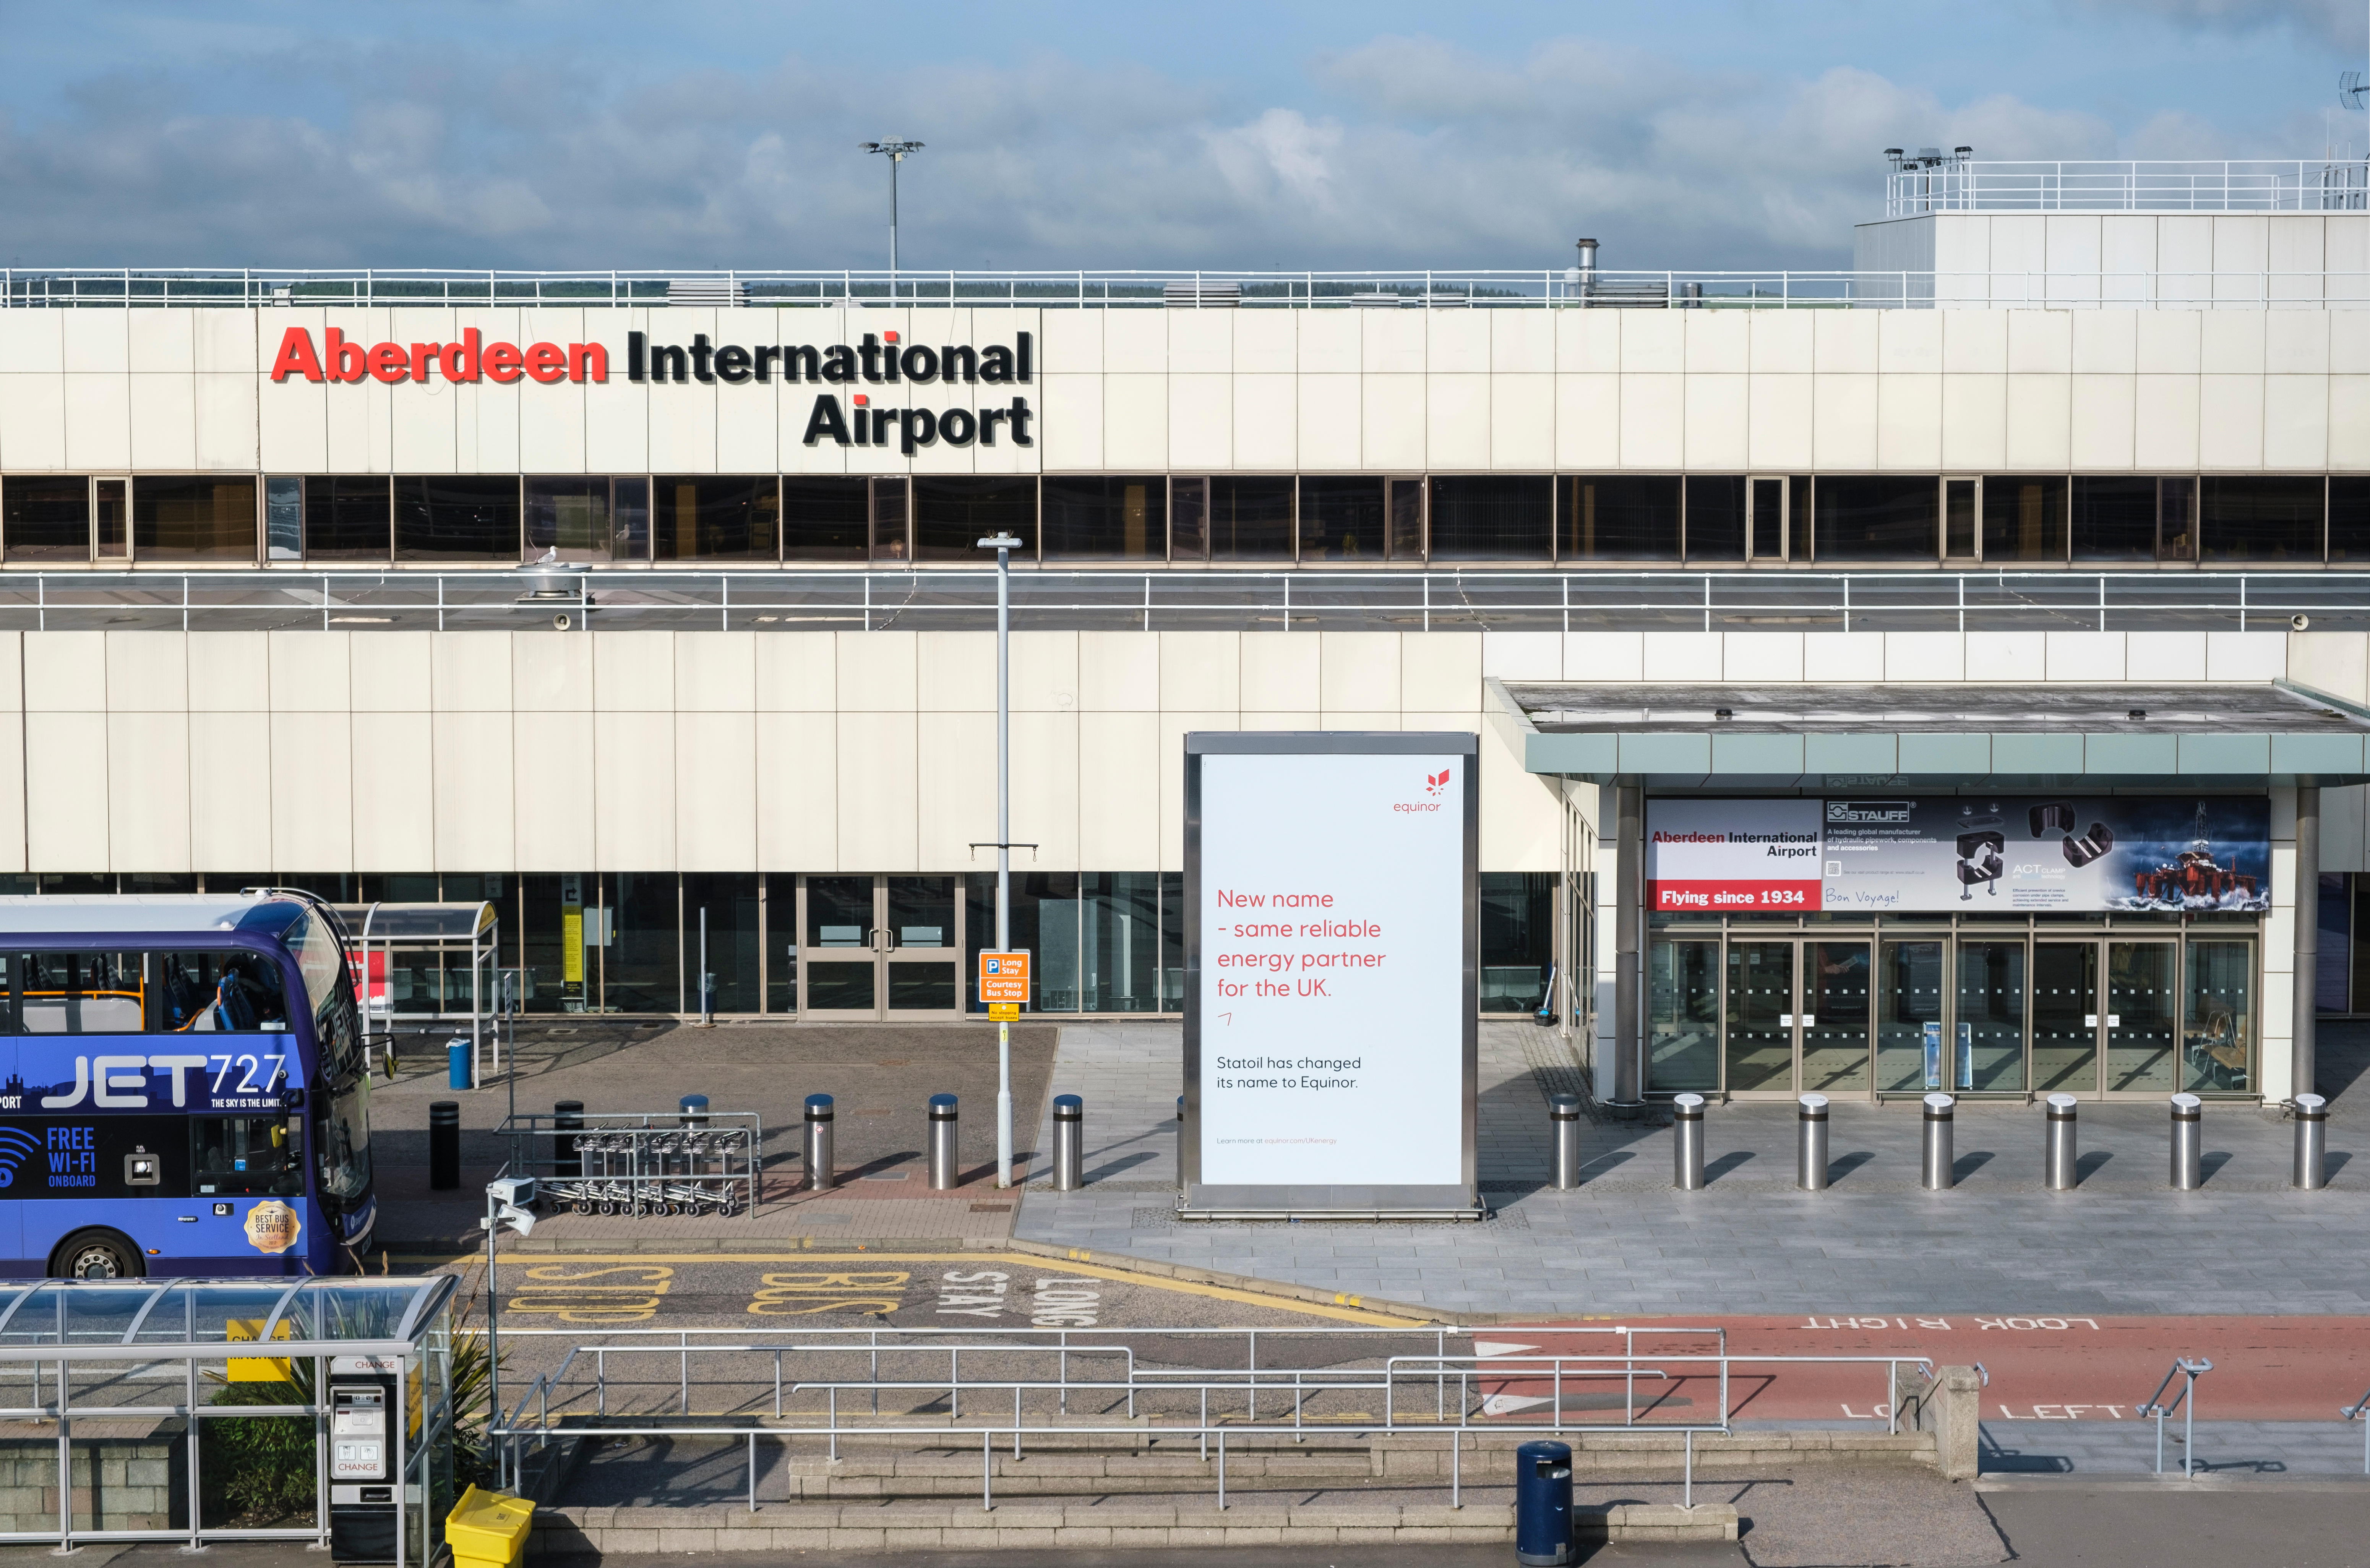 Exterior view of Aberdeen Airport